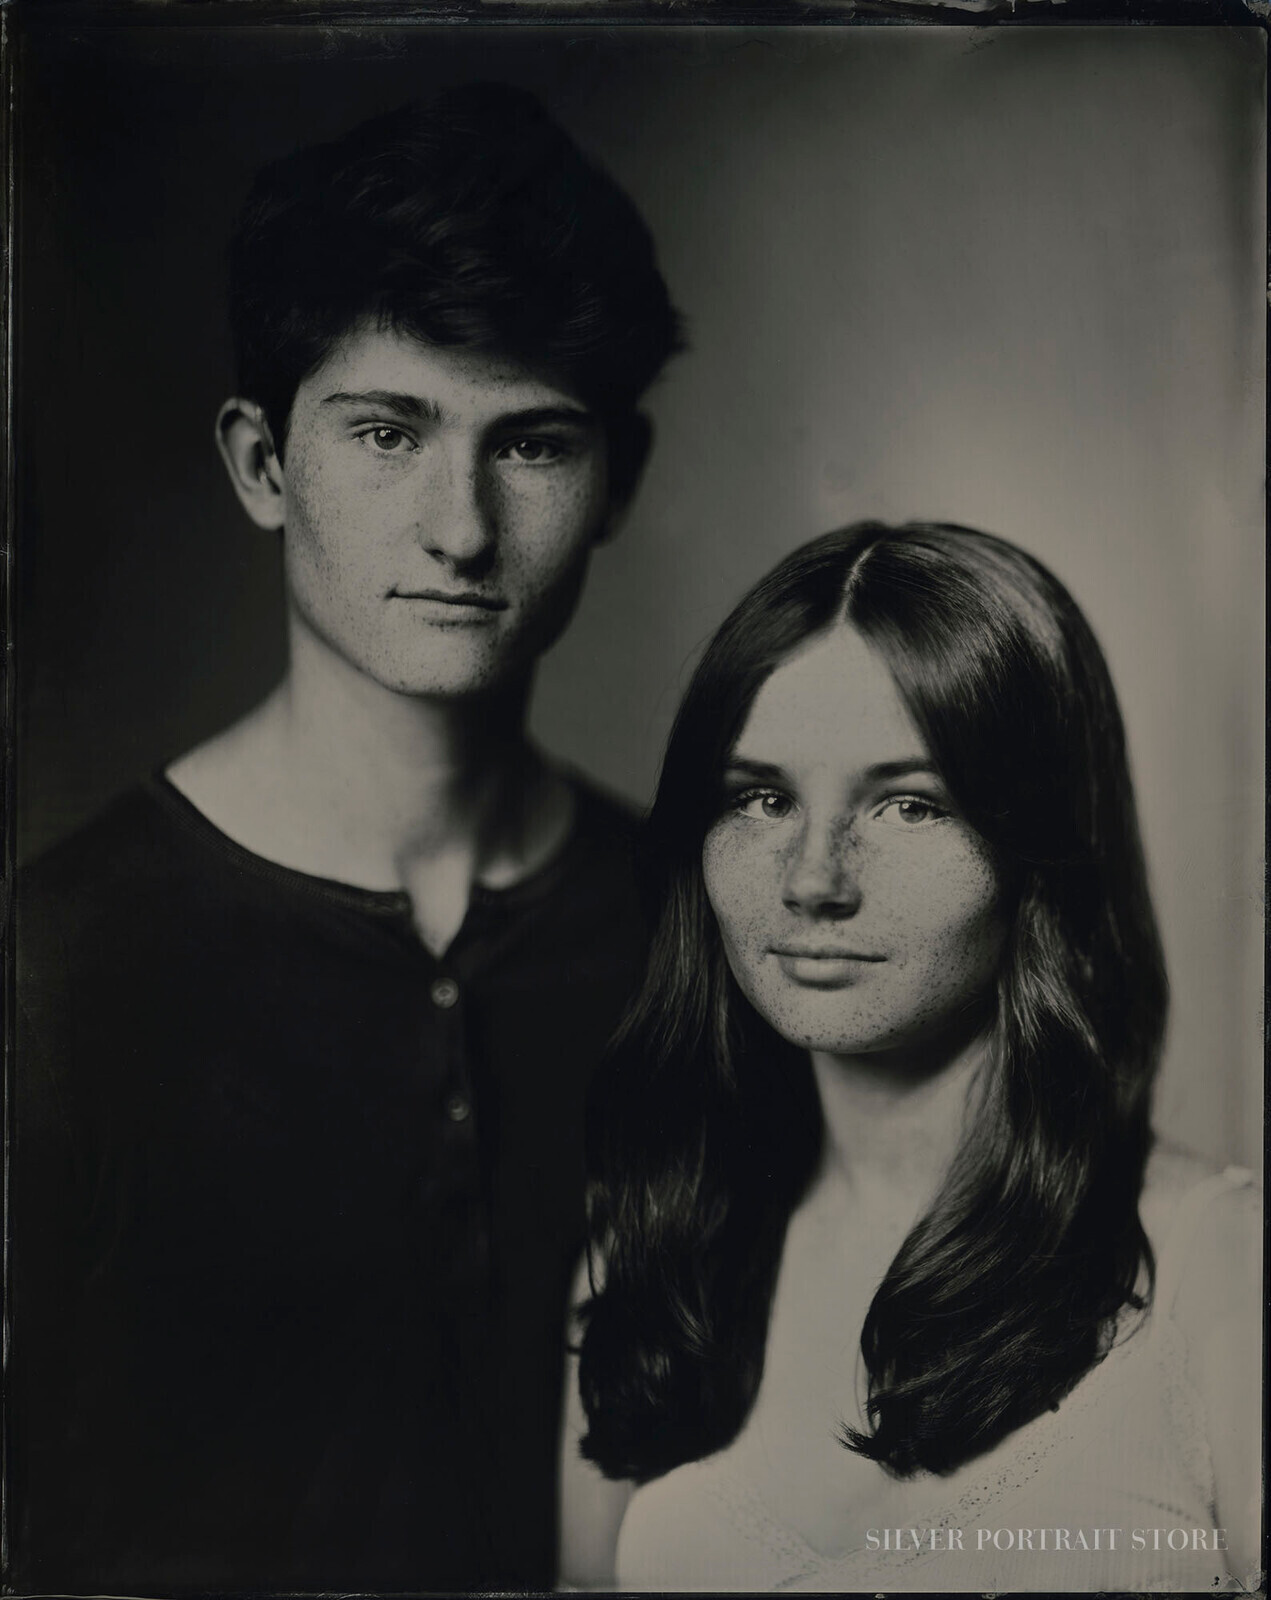 Mick en Josephine-Silver Portrait Store-Wet plate collodion-Tintype 20 x 25 cm.